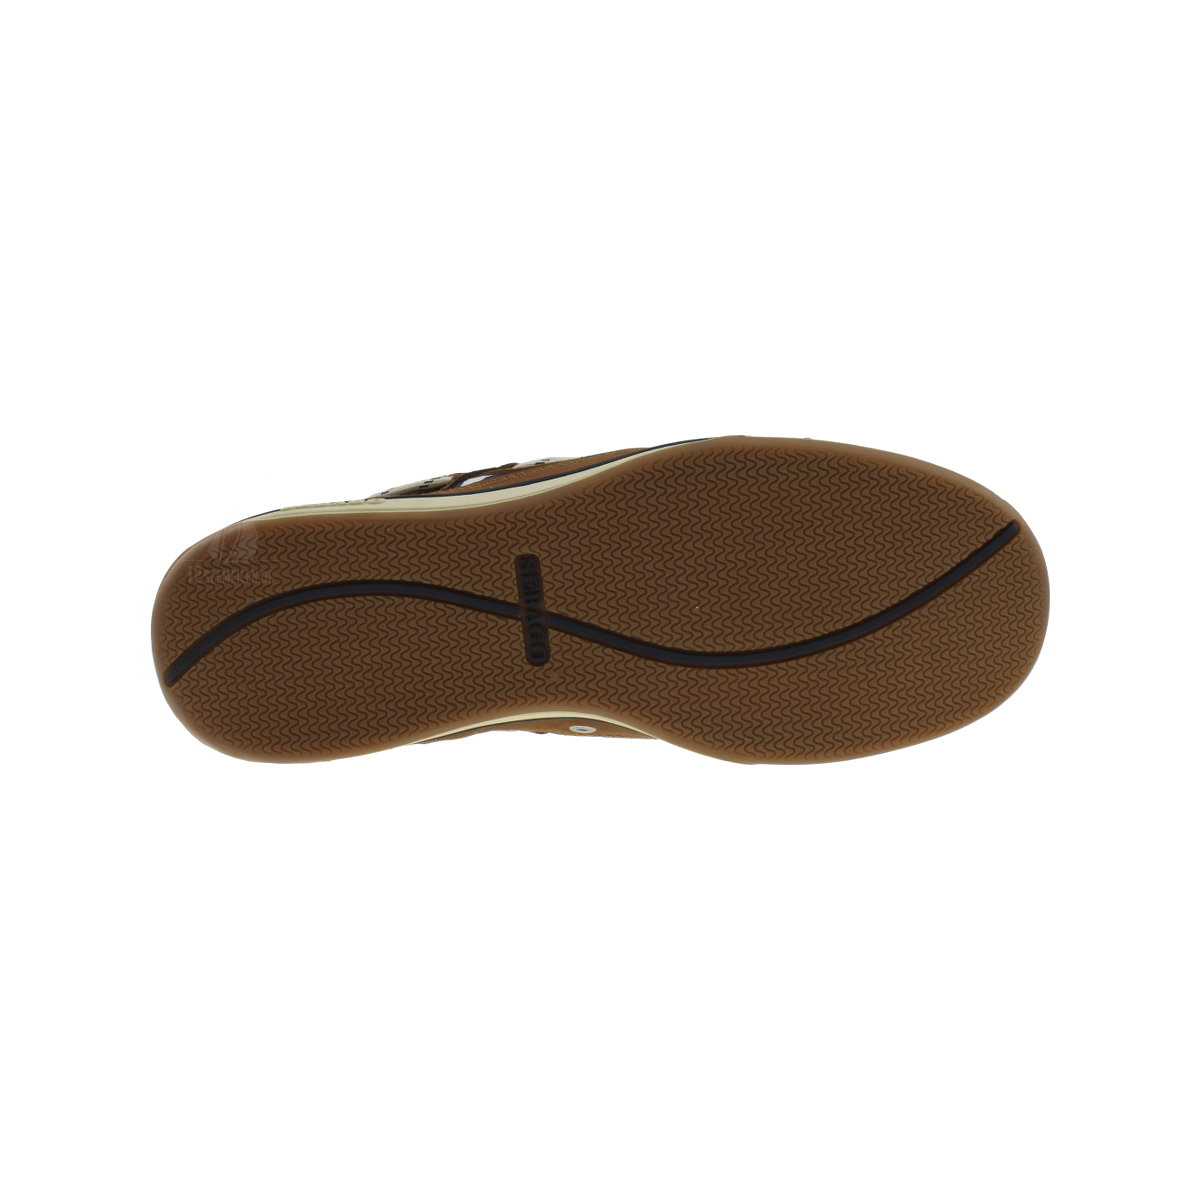 Sebago Triton Three-Eye chaussures bateau homme british tan/brown leather EU 44 (US 10)